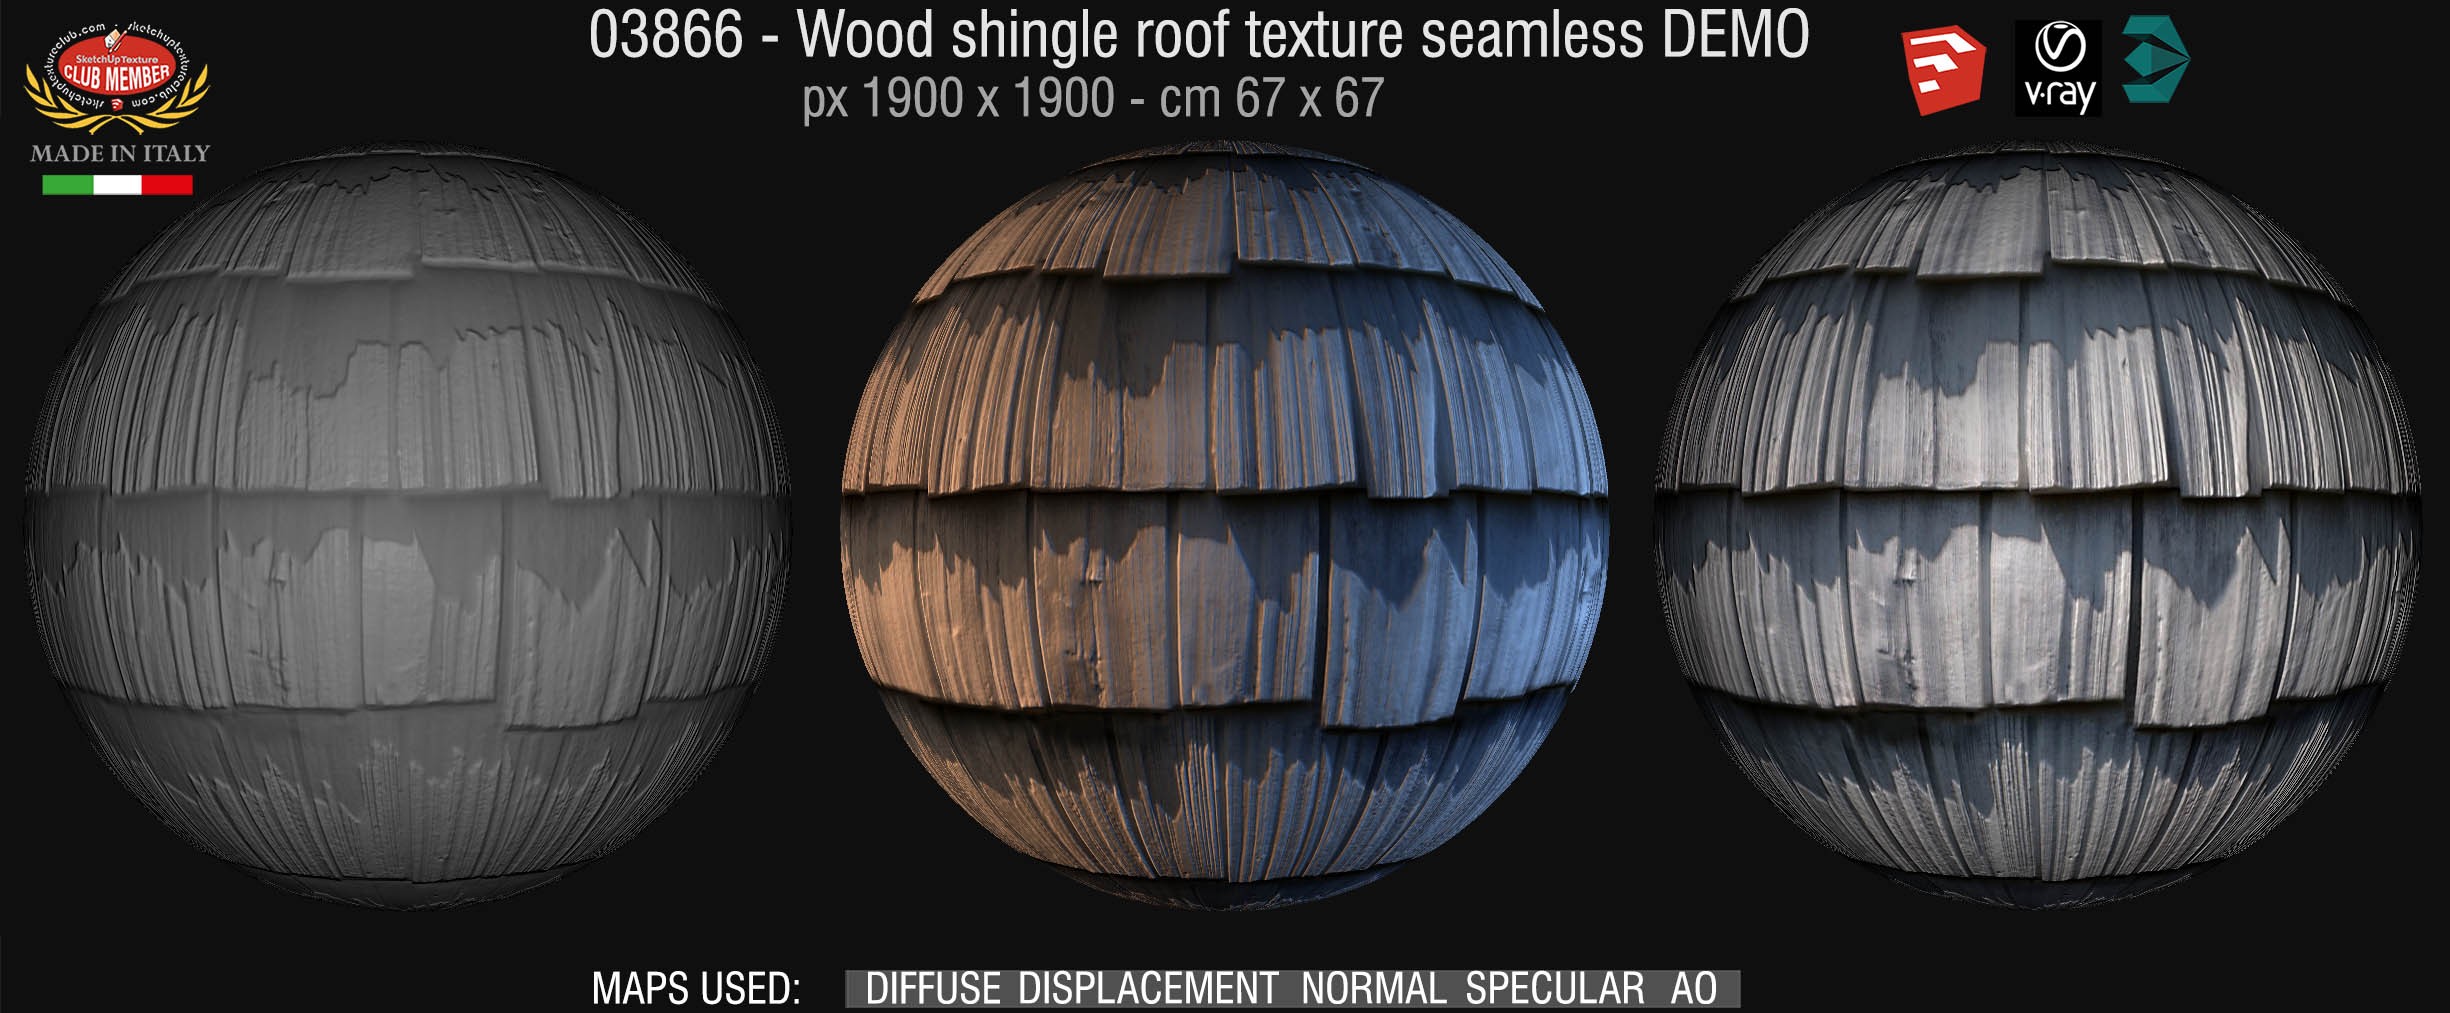 03866 Wood shingle roof texture seamless + maps DEMO